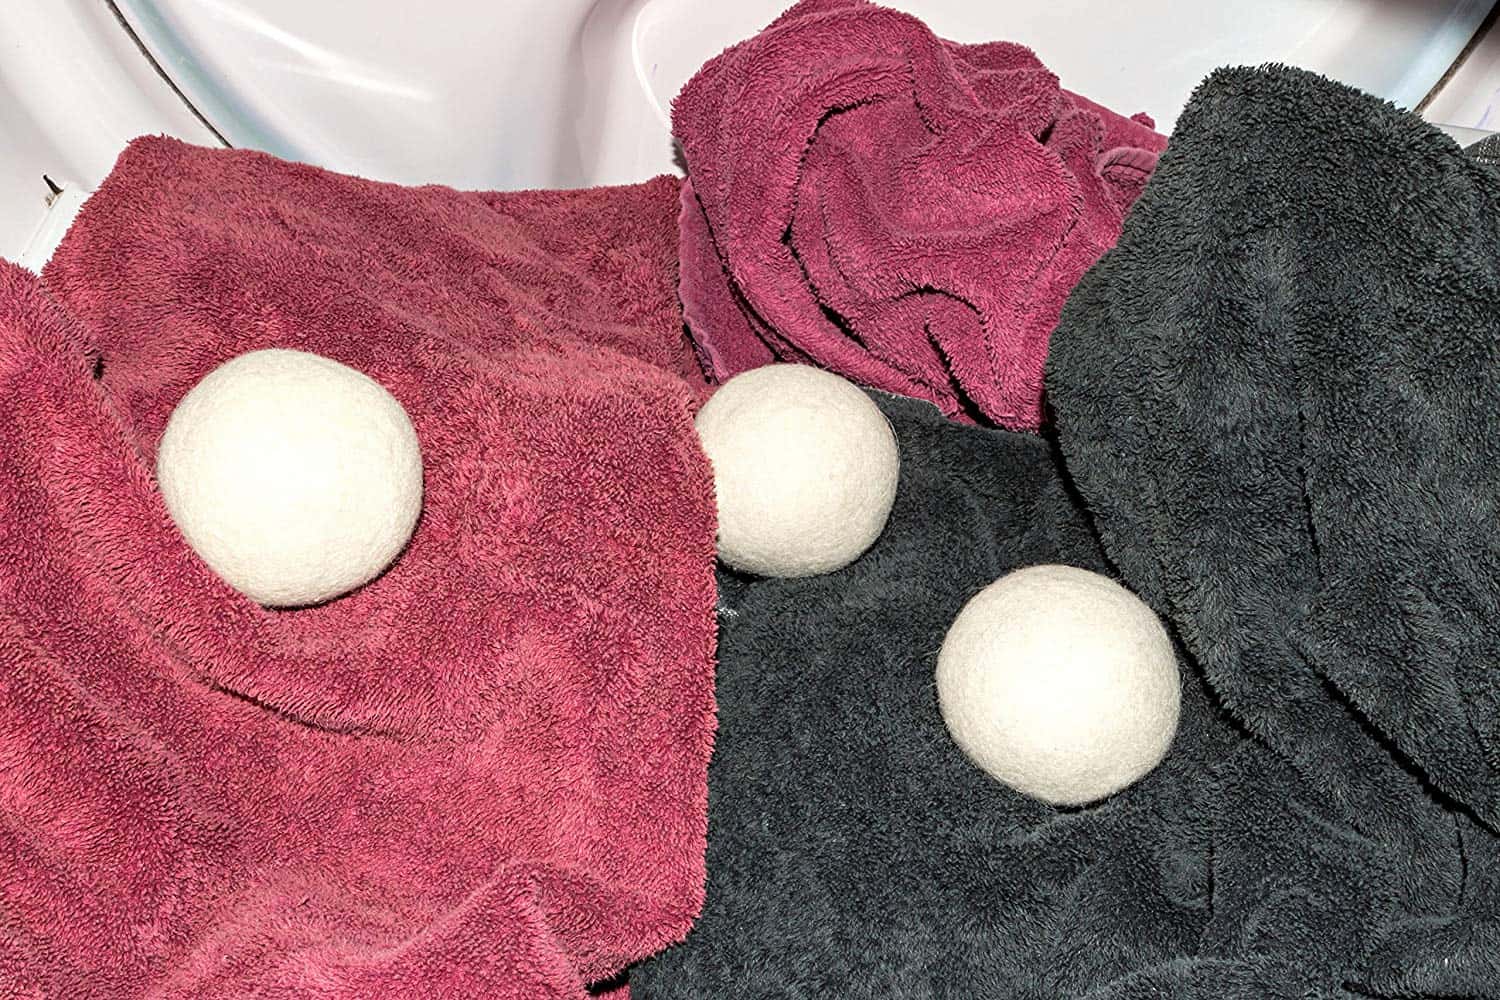 100% Organic Reusable Wrinkles Handmade Dryer Balls Saves Drying Time & Chemical Free Felt laundry ball Wool felt dry ball